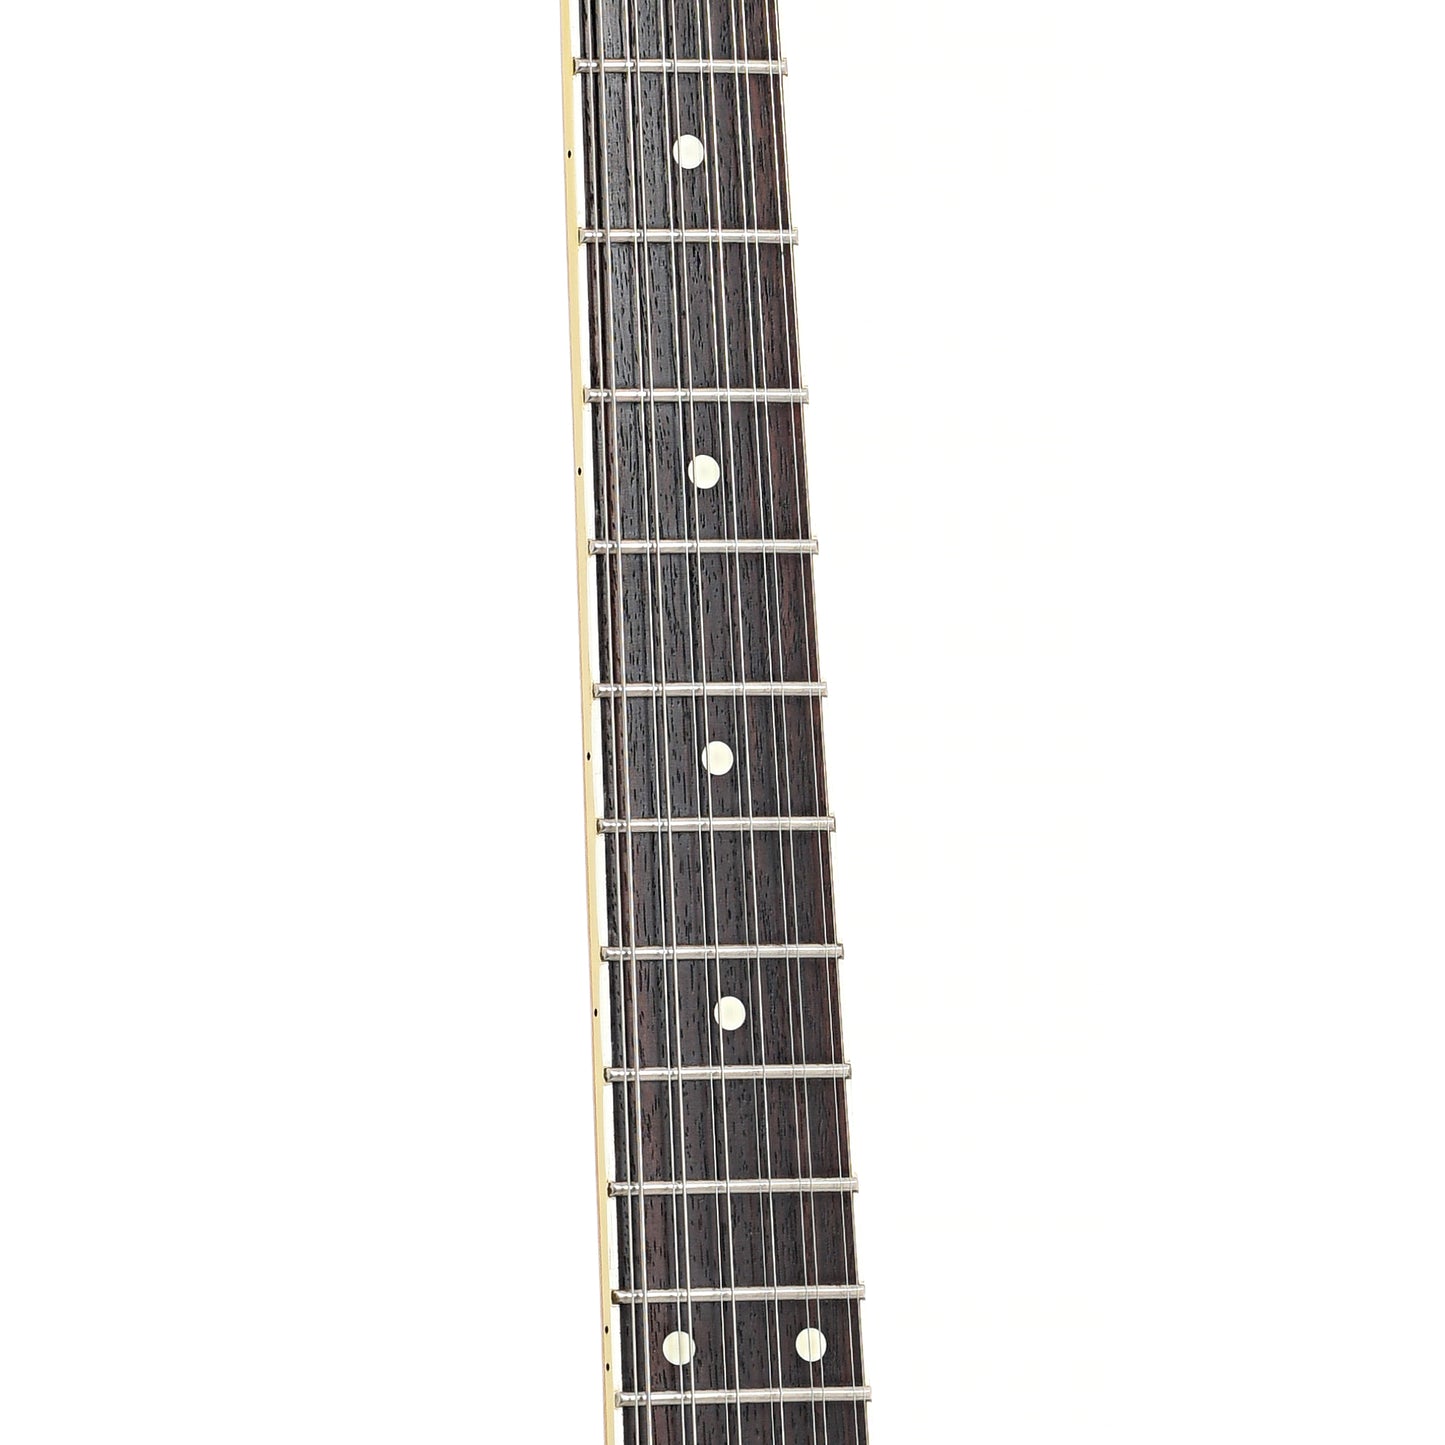 Fretboard of Squier Venus 12-String Electric Guitar (1997)